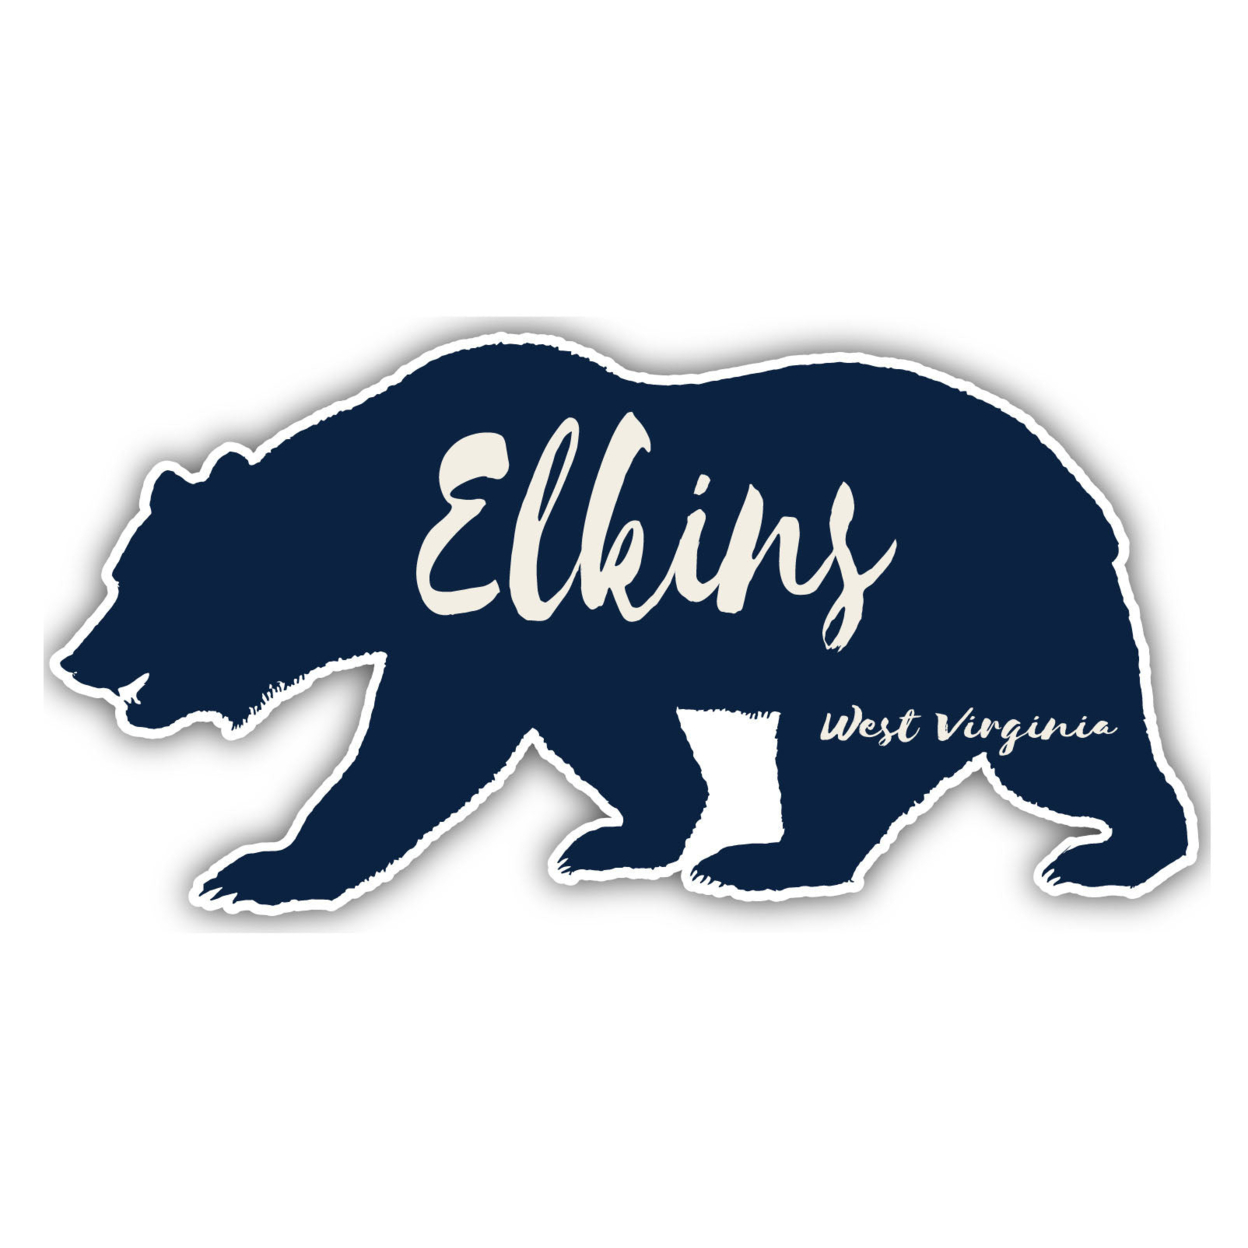 Elkins West Virginia Souvenir Decorative Stickers (Choose Theme And Size) - 4-Pack, 8-Inch, Tent